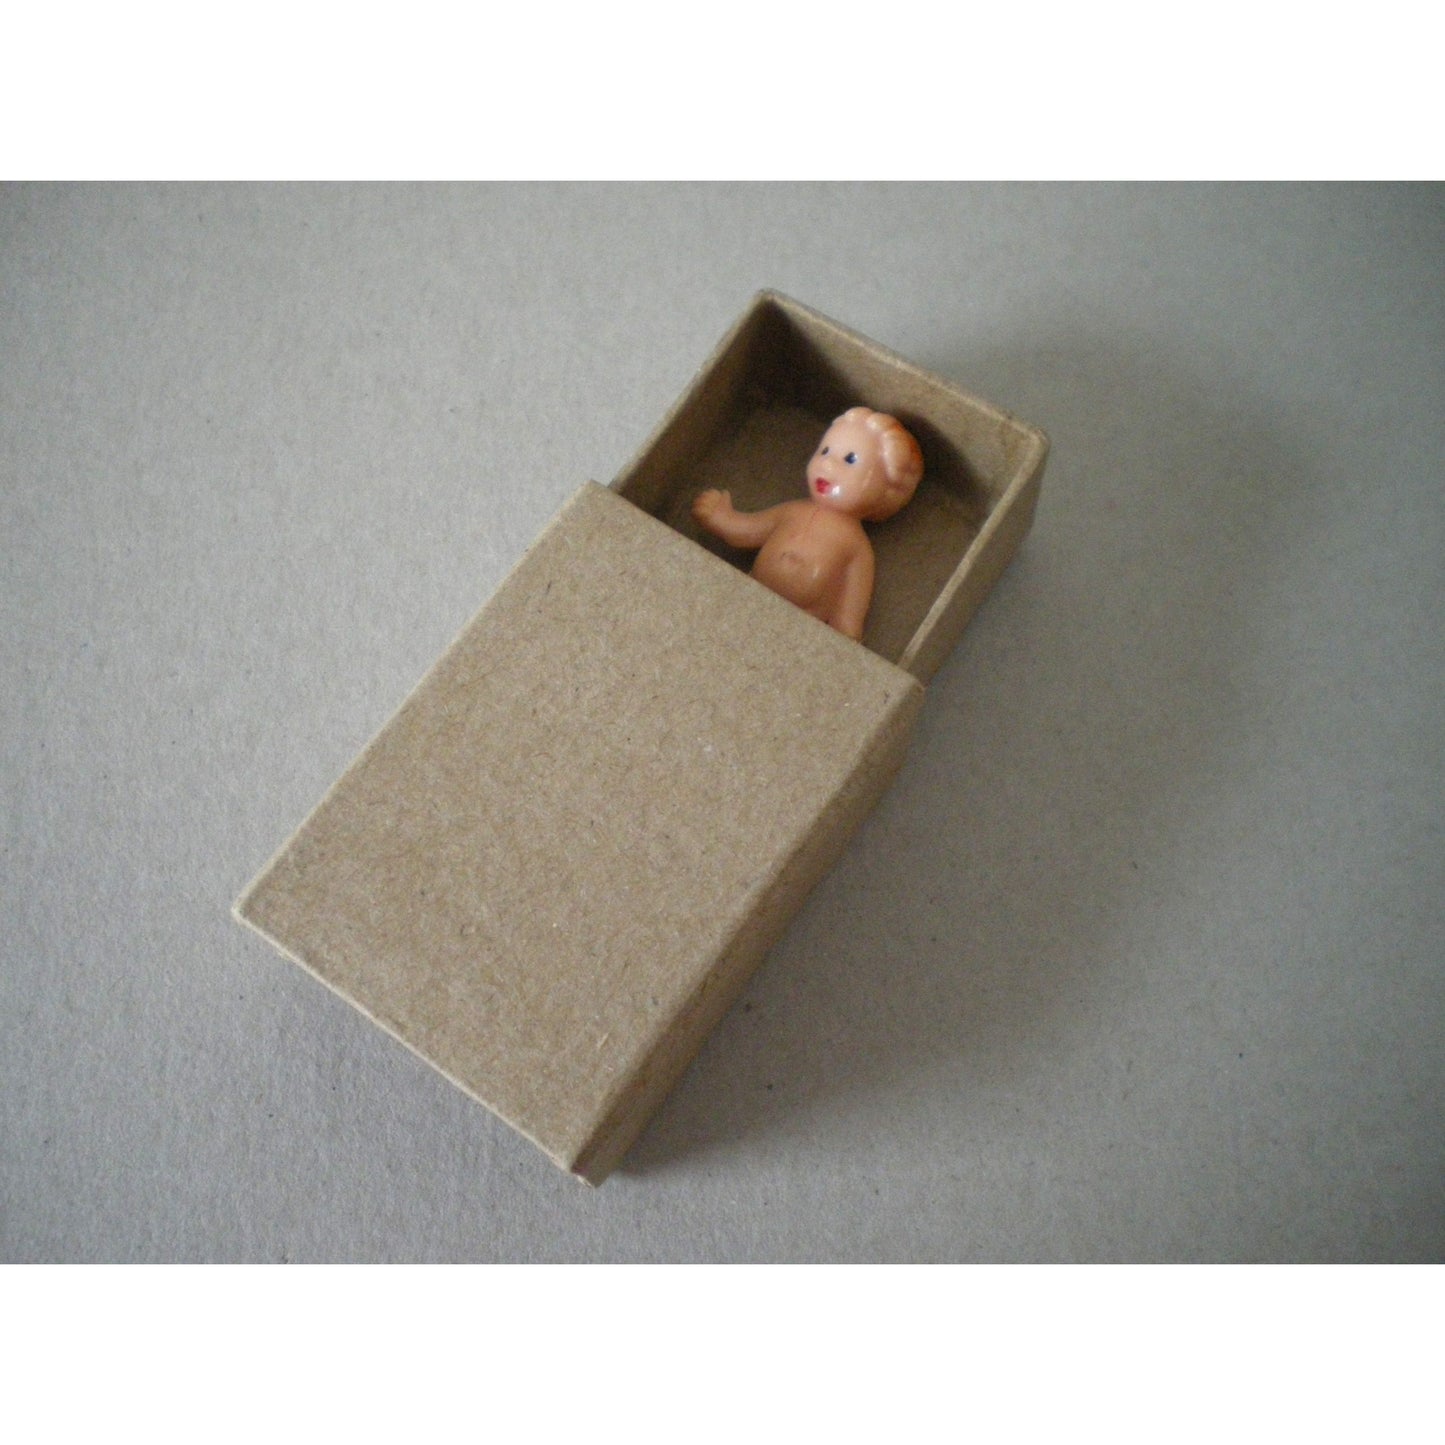 Plastic Sitting Dolls 38mm x Pack of 25